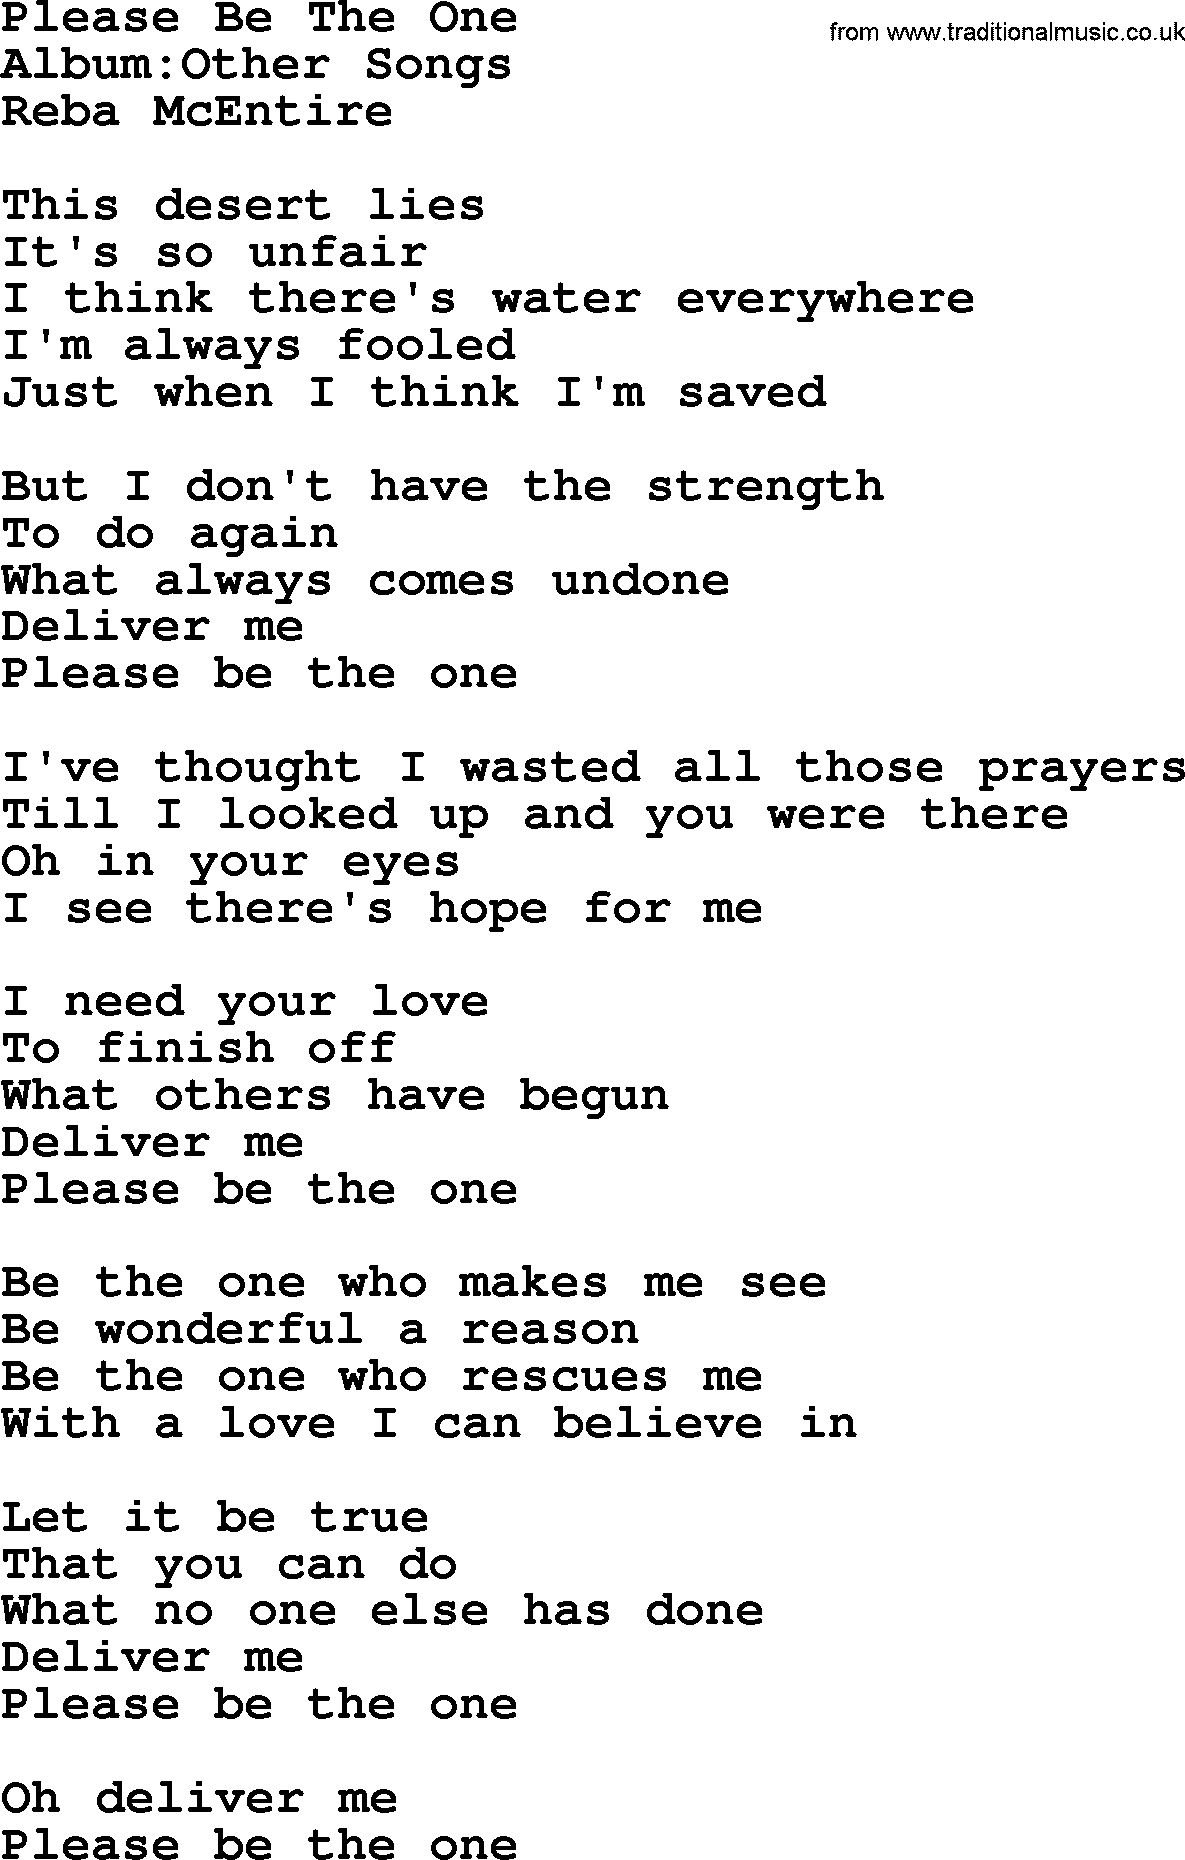 Reba McEntire song: Please Be The One lyrics